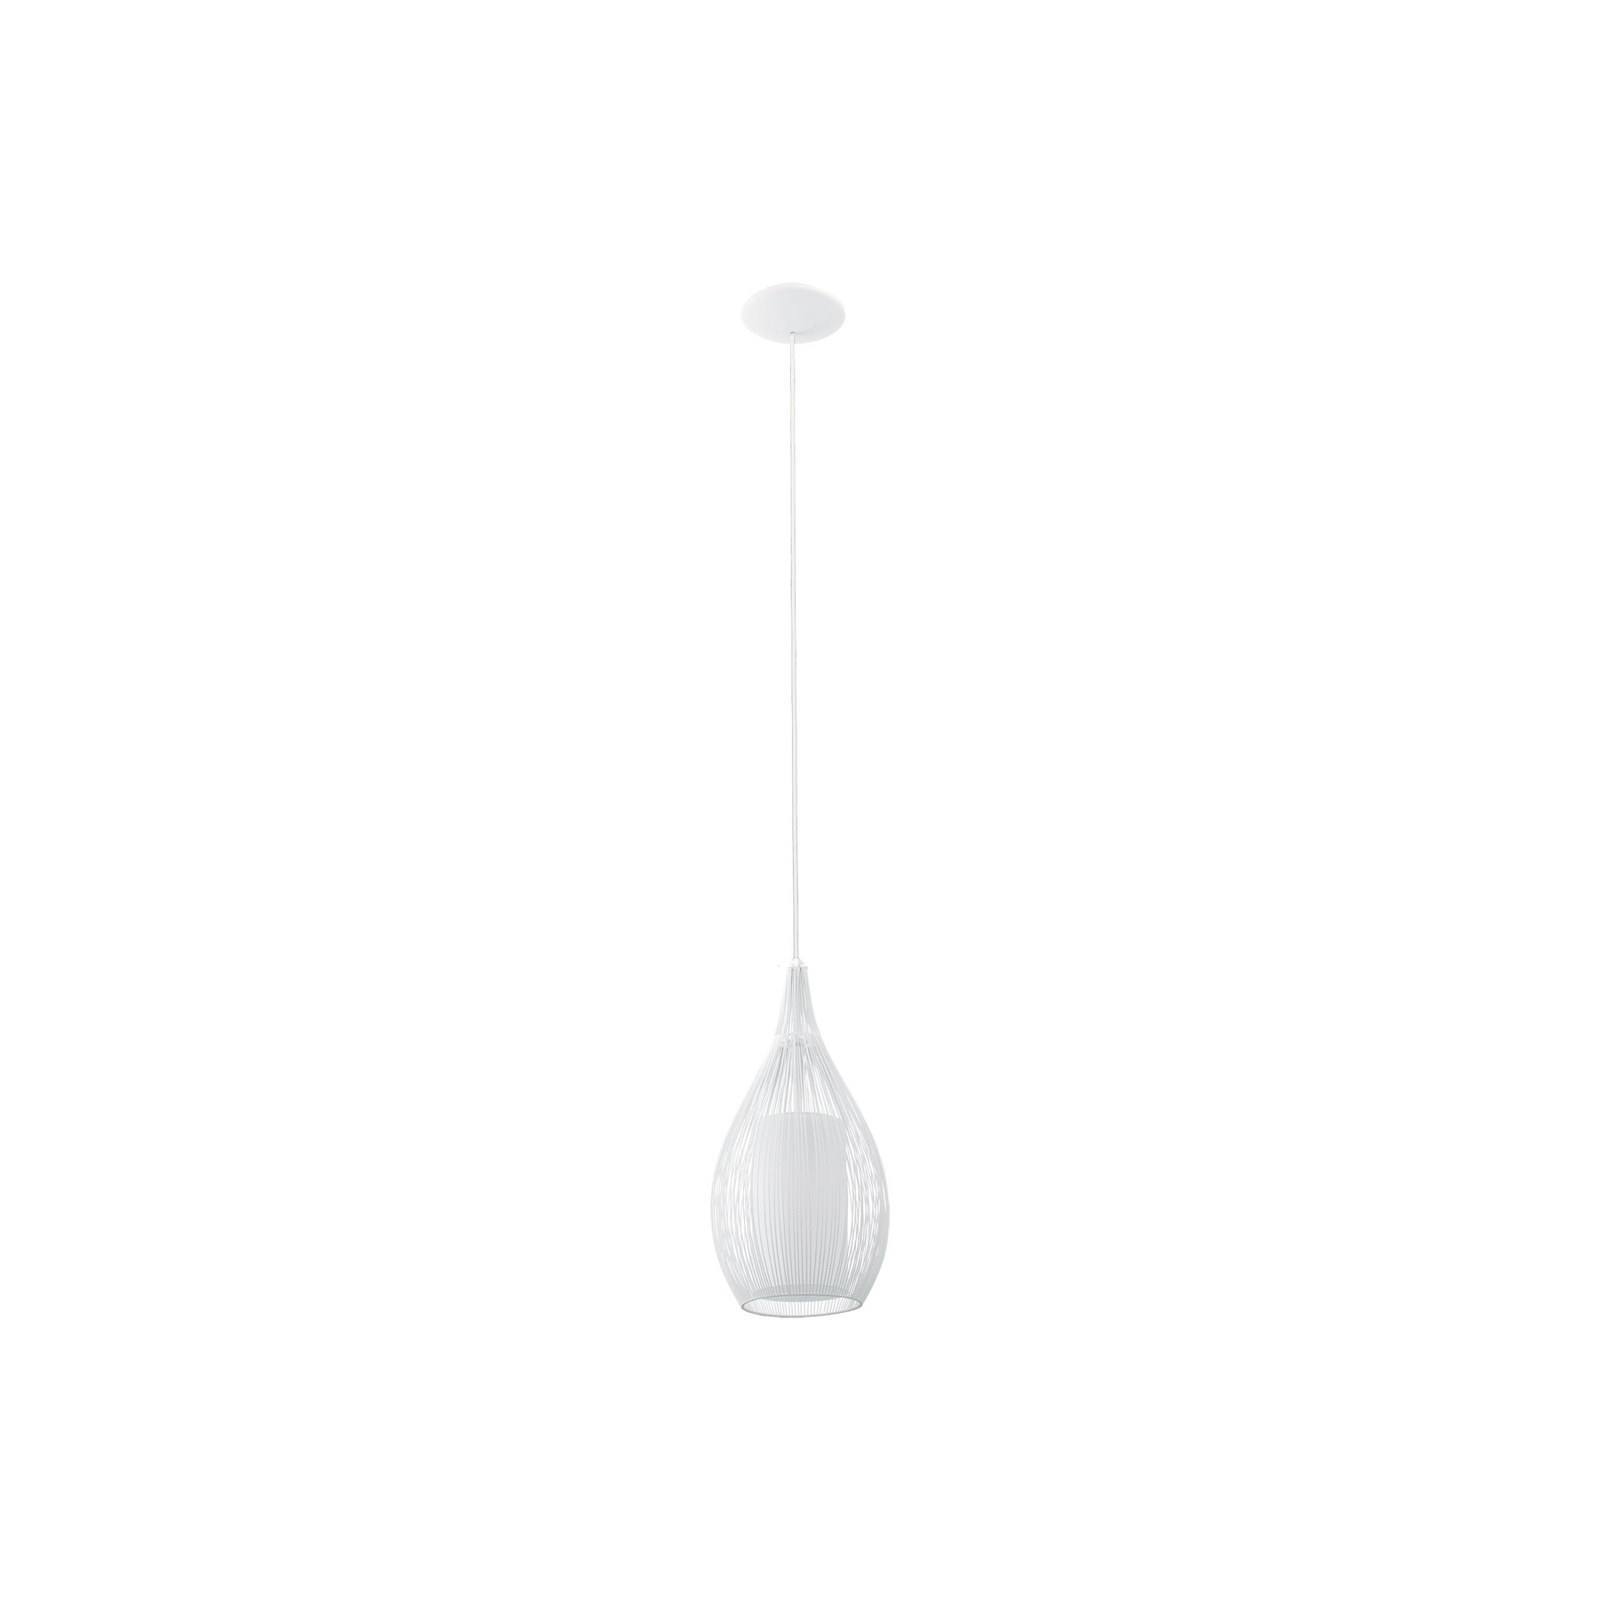 Beacon Solis pendant light, white, metal, glass, Ø 19 cm